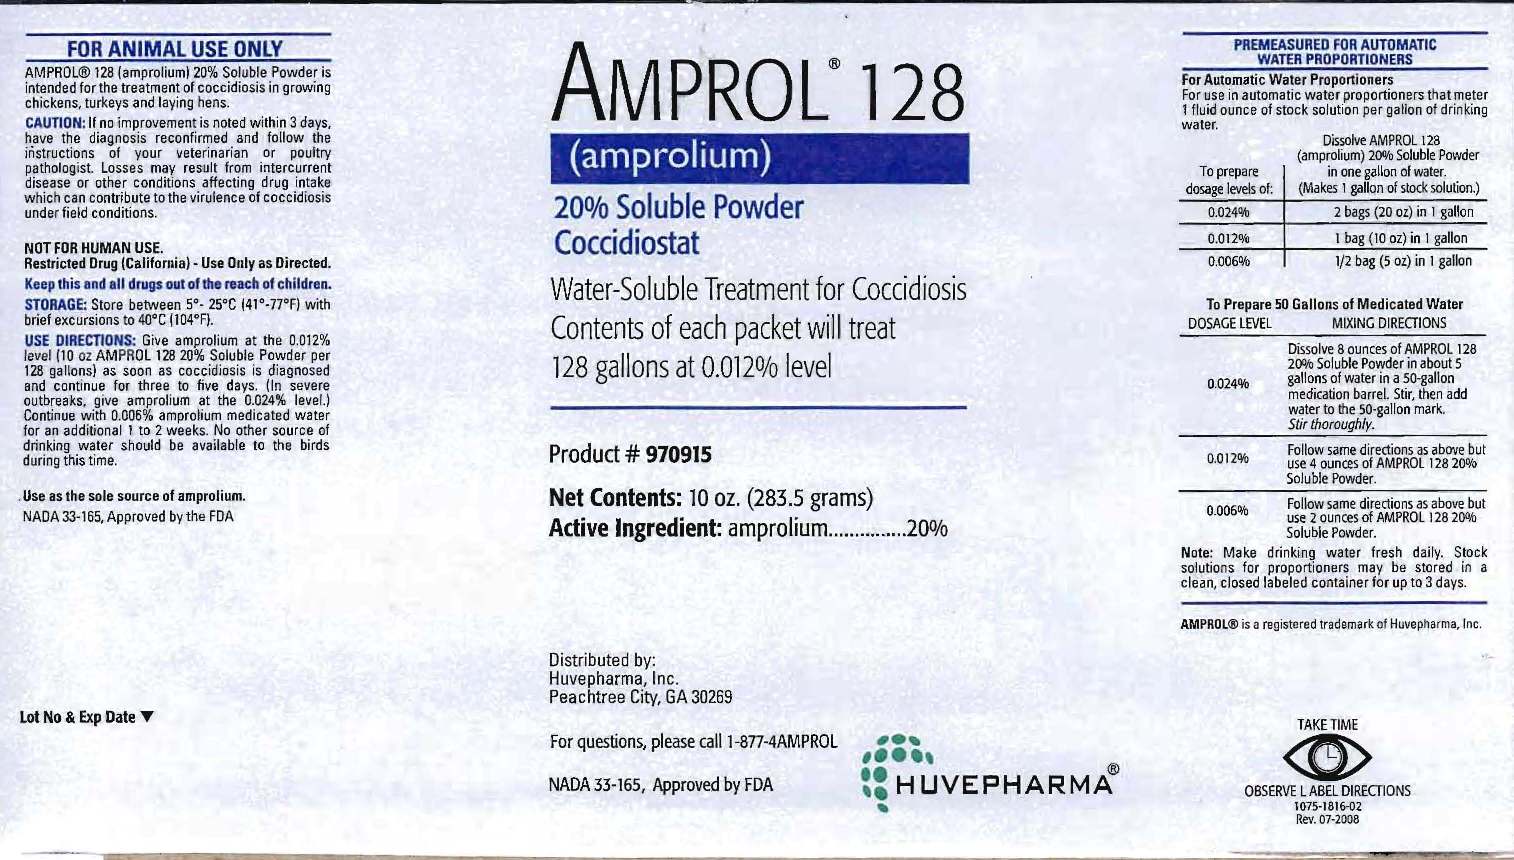 Amprol 128 Label Image